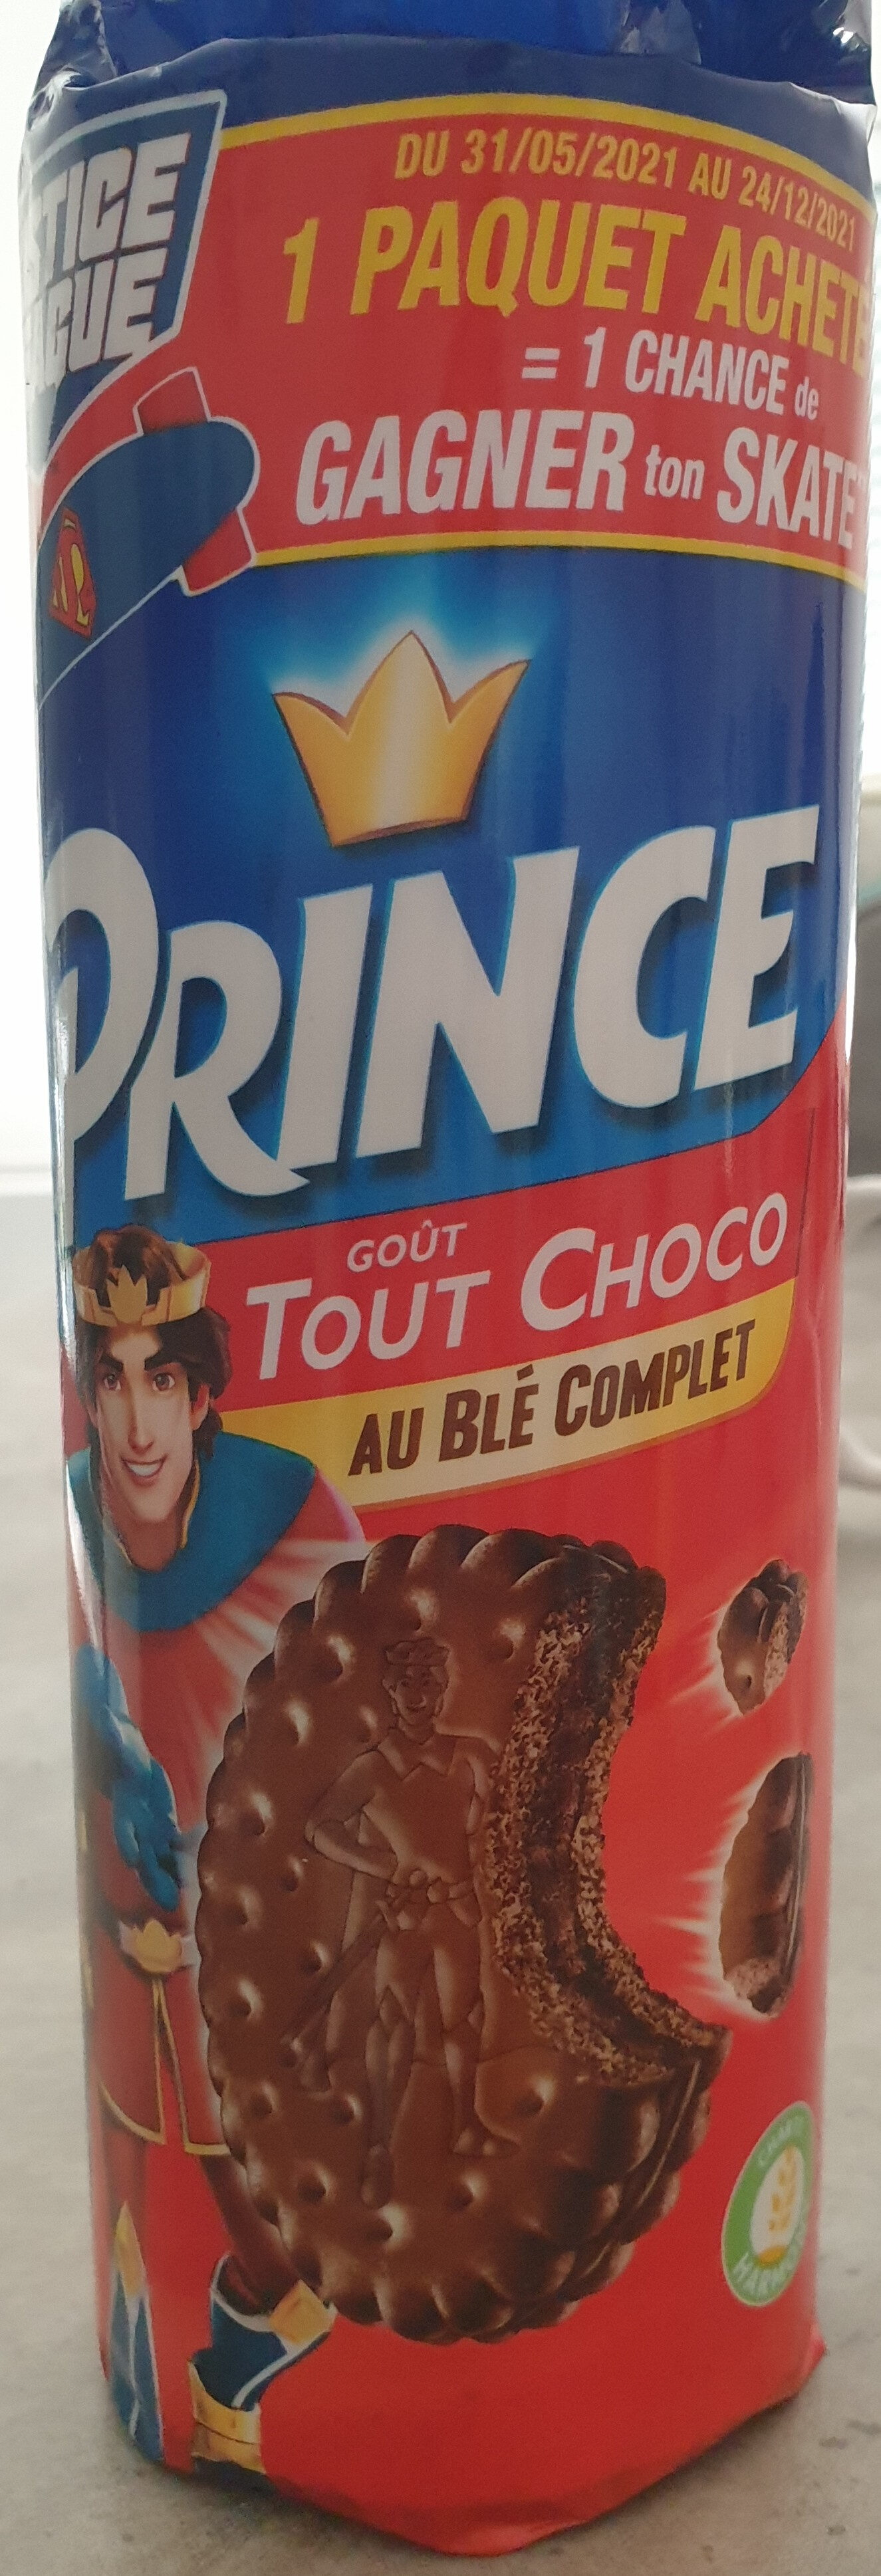 Prince goût tout choco - Produit